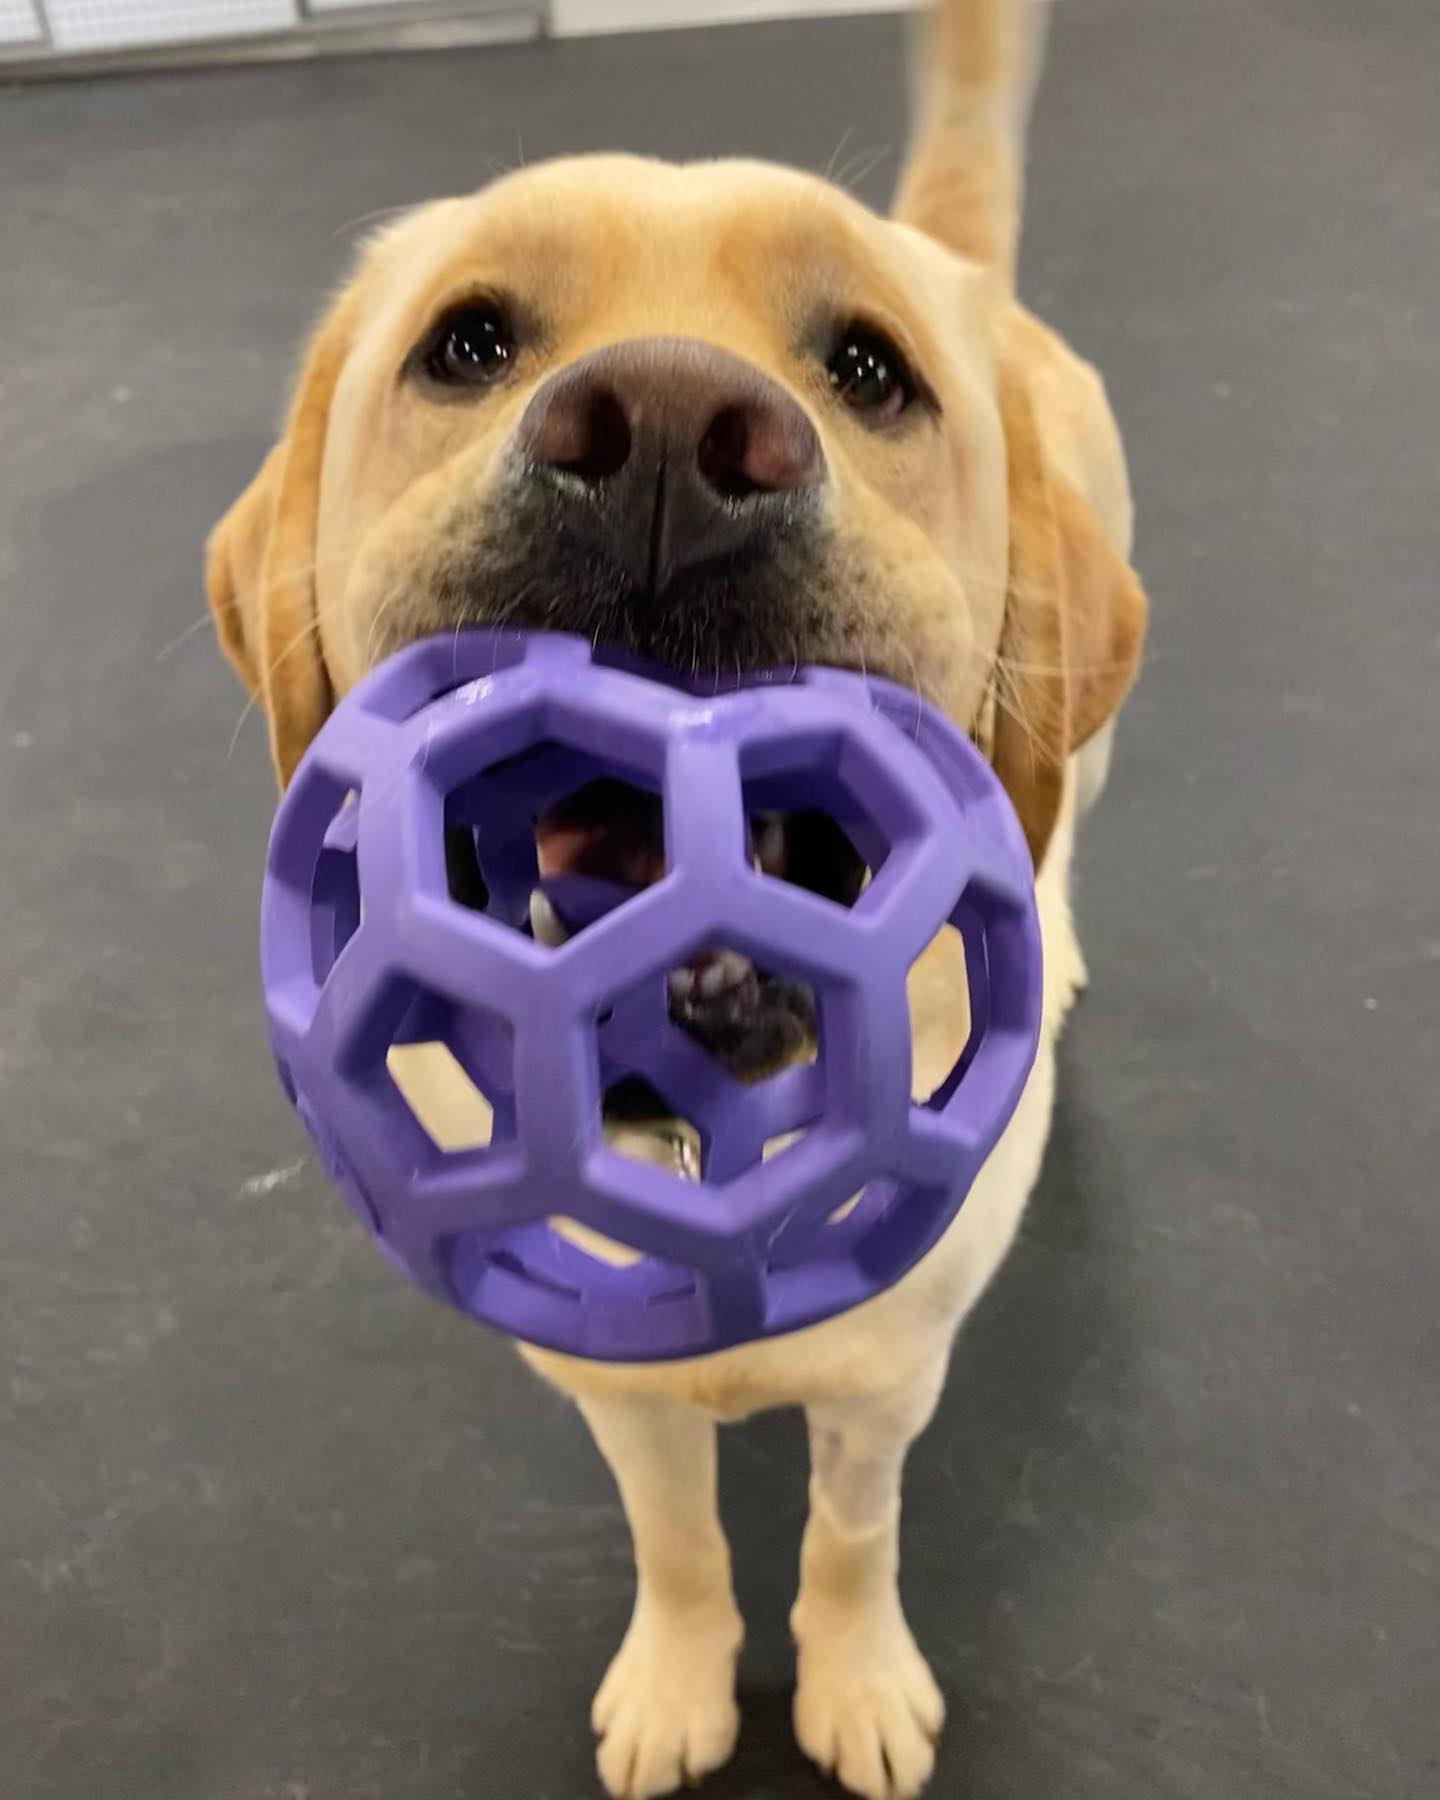 Dog playing with purple ball